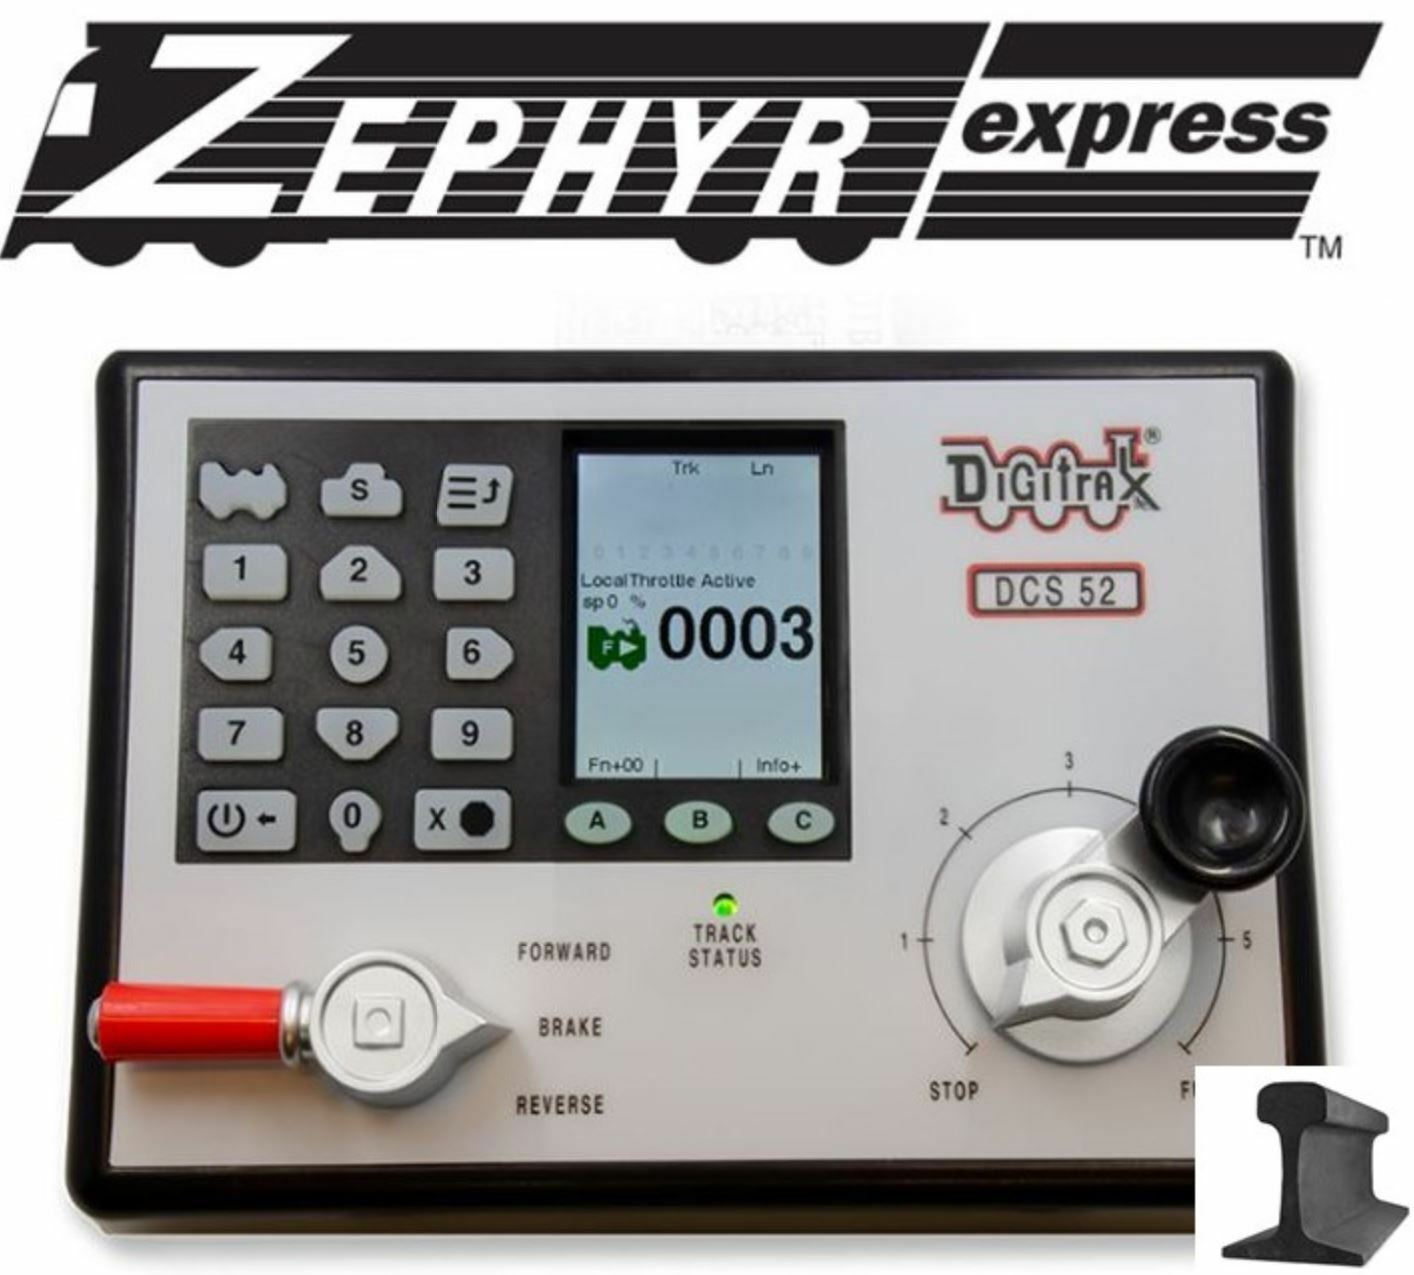 Digitrax 2021 Dcc Dcs52 Zephyr Express Starter Set Usa Edition ~ W/power Supply